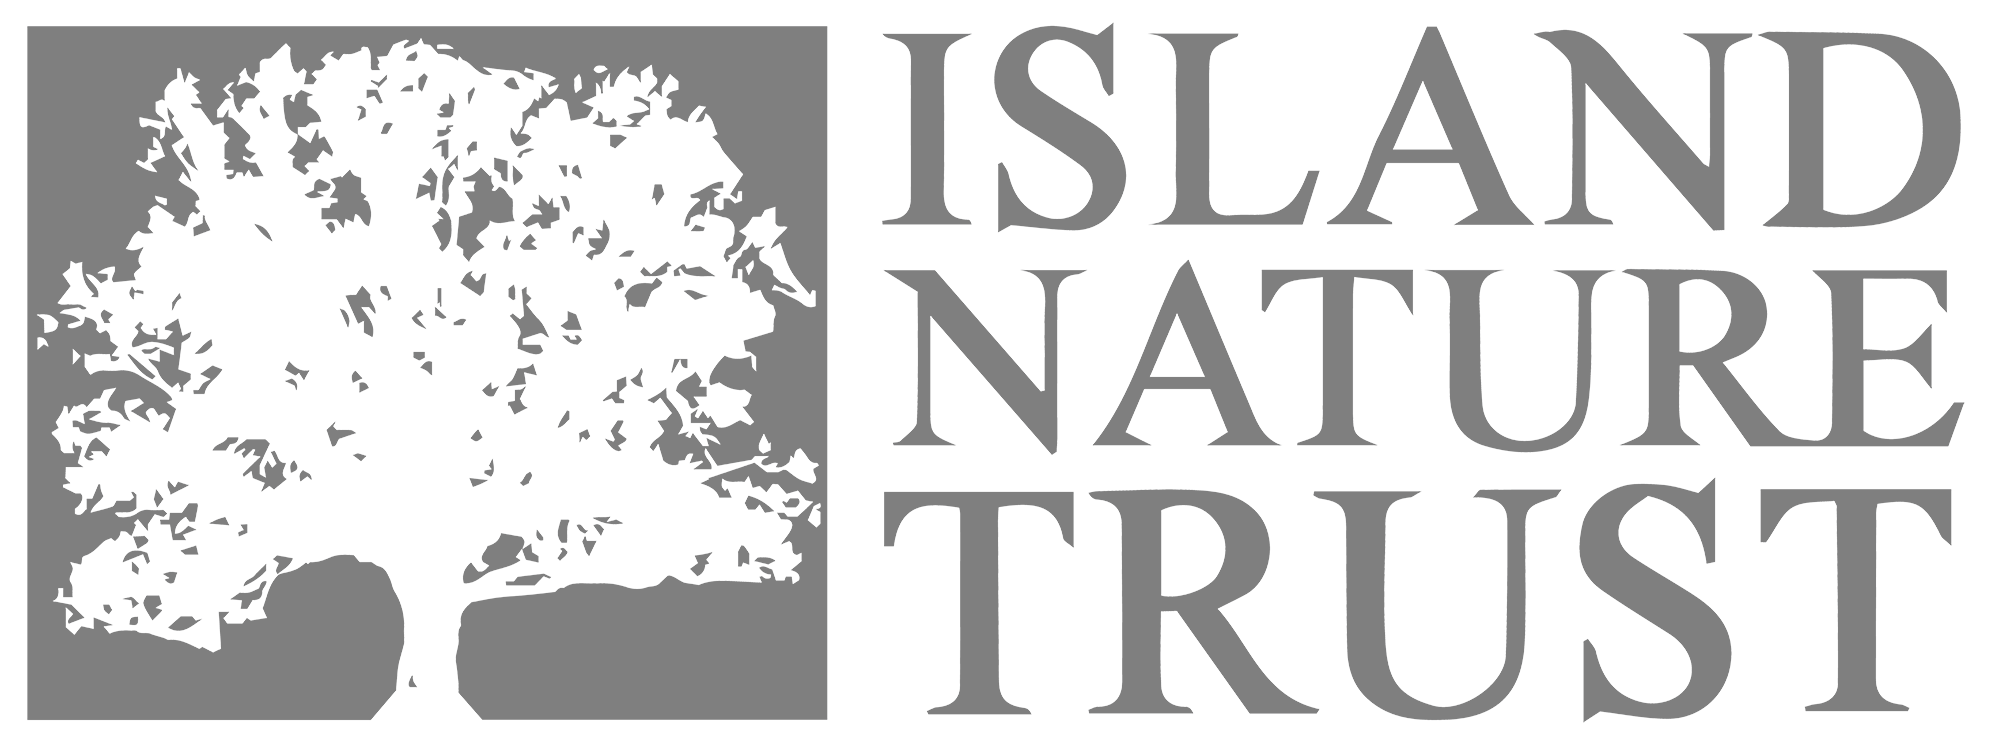 Island Nature Trust logo